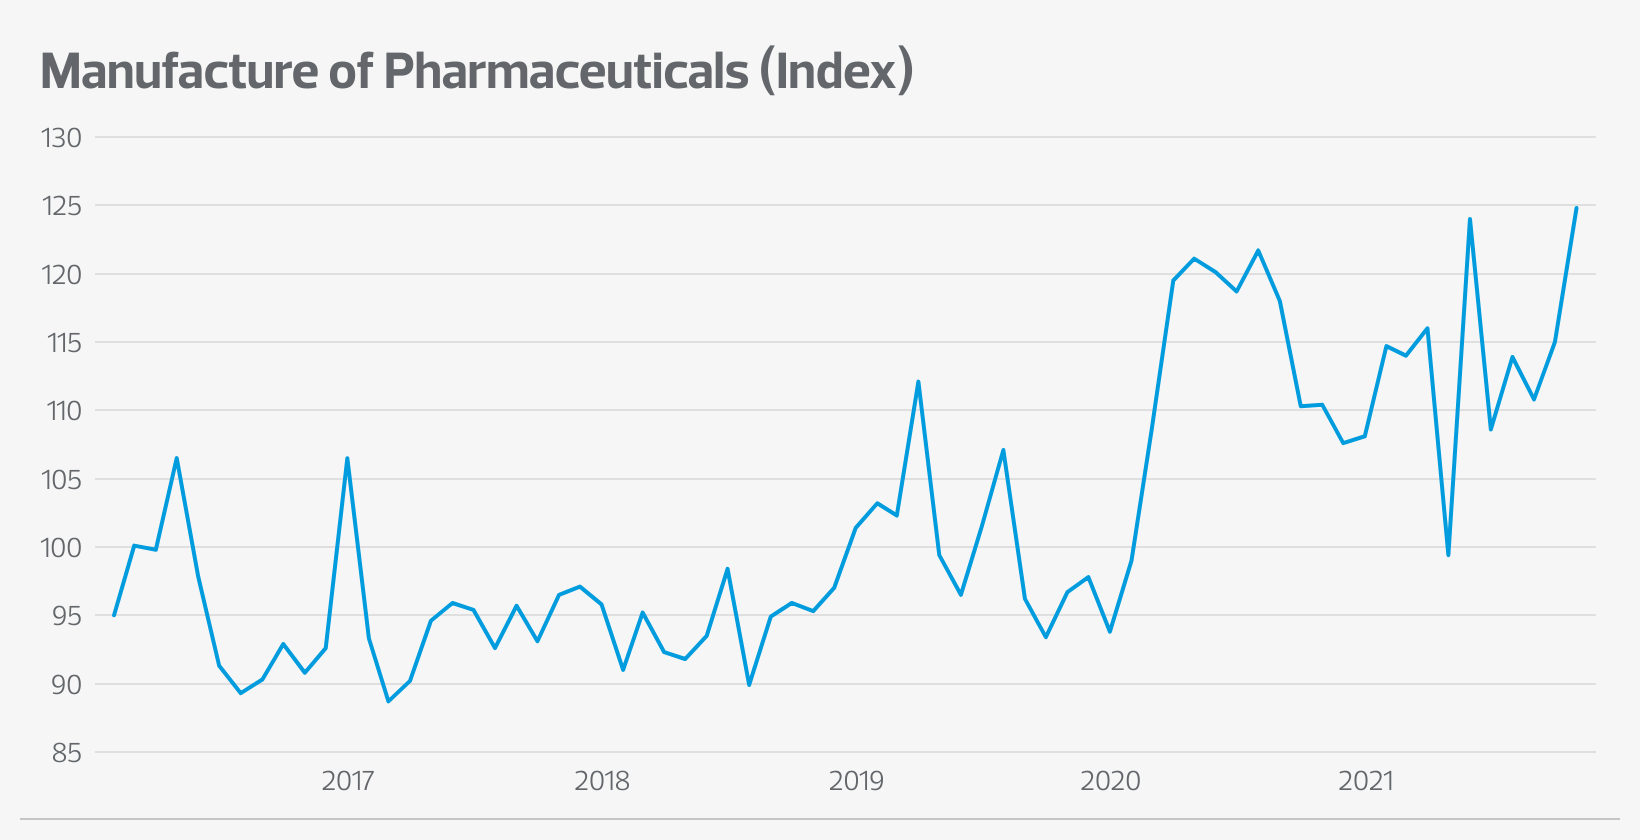 Manufacturing of pharmaceuticals (Index) graph